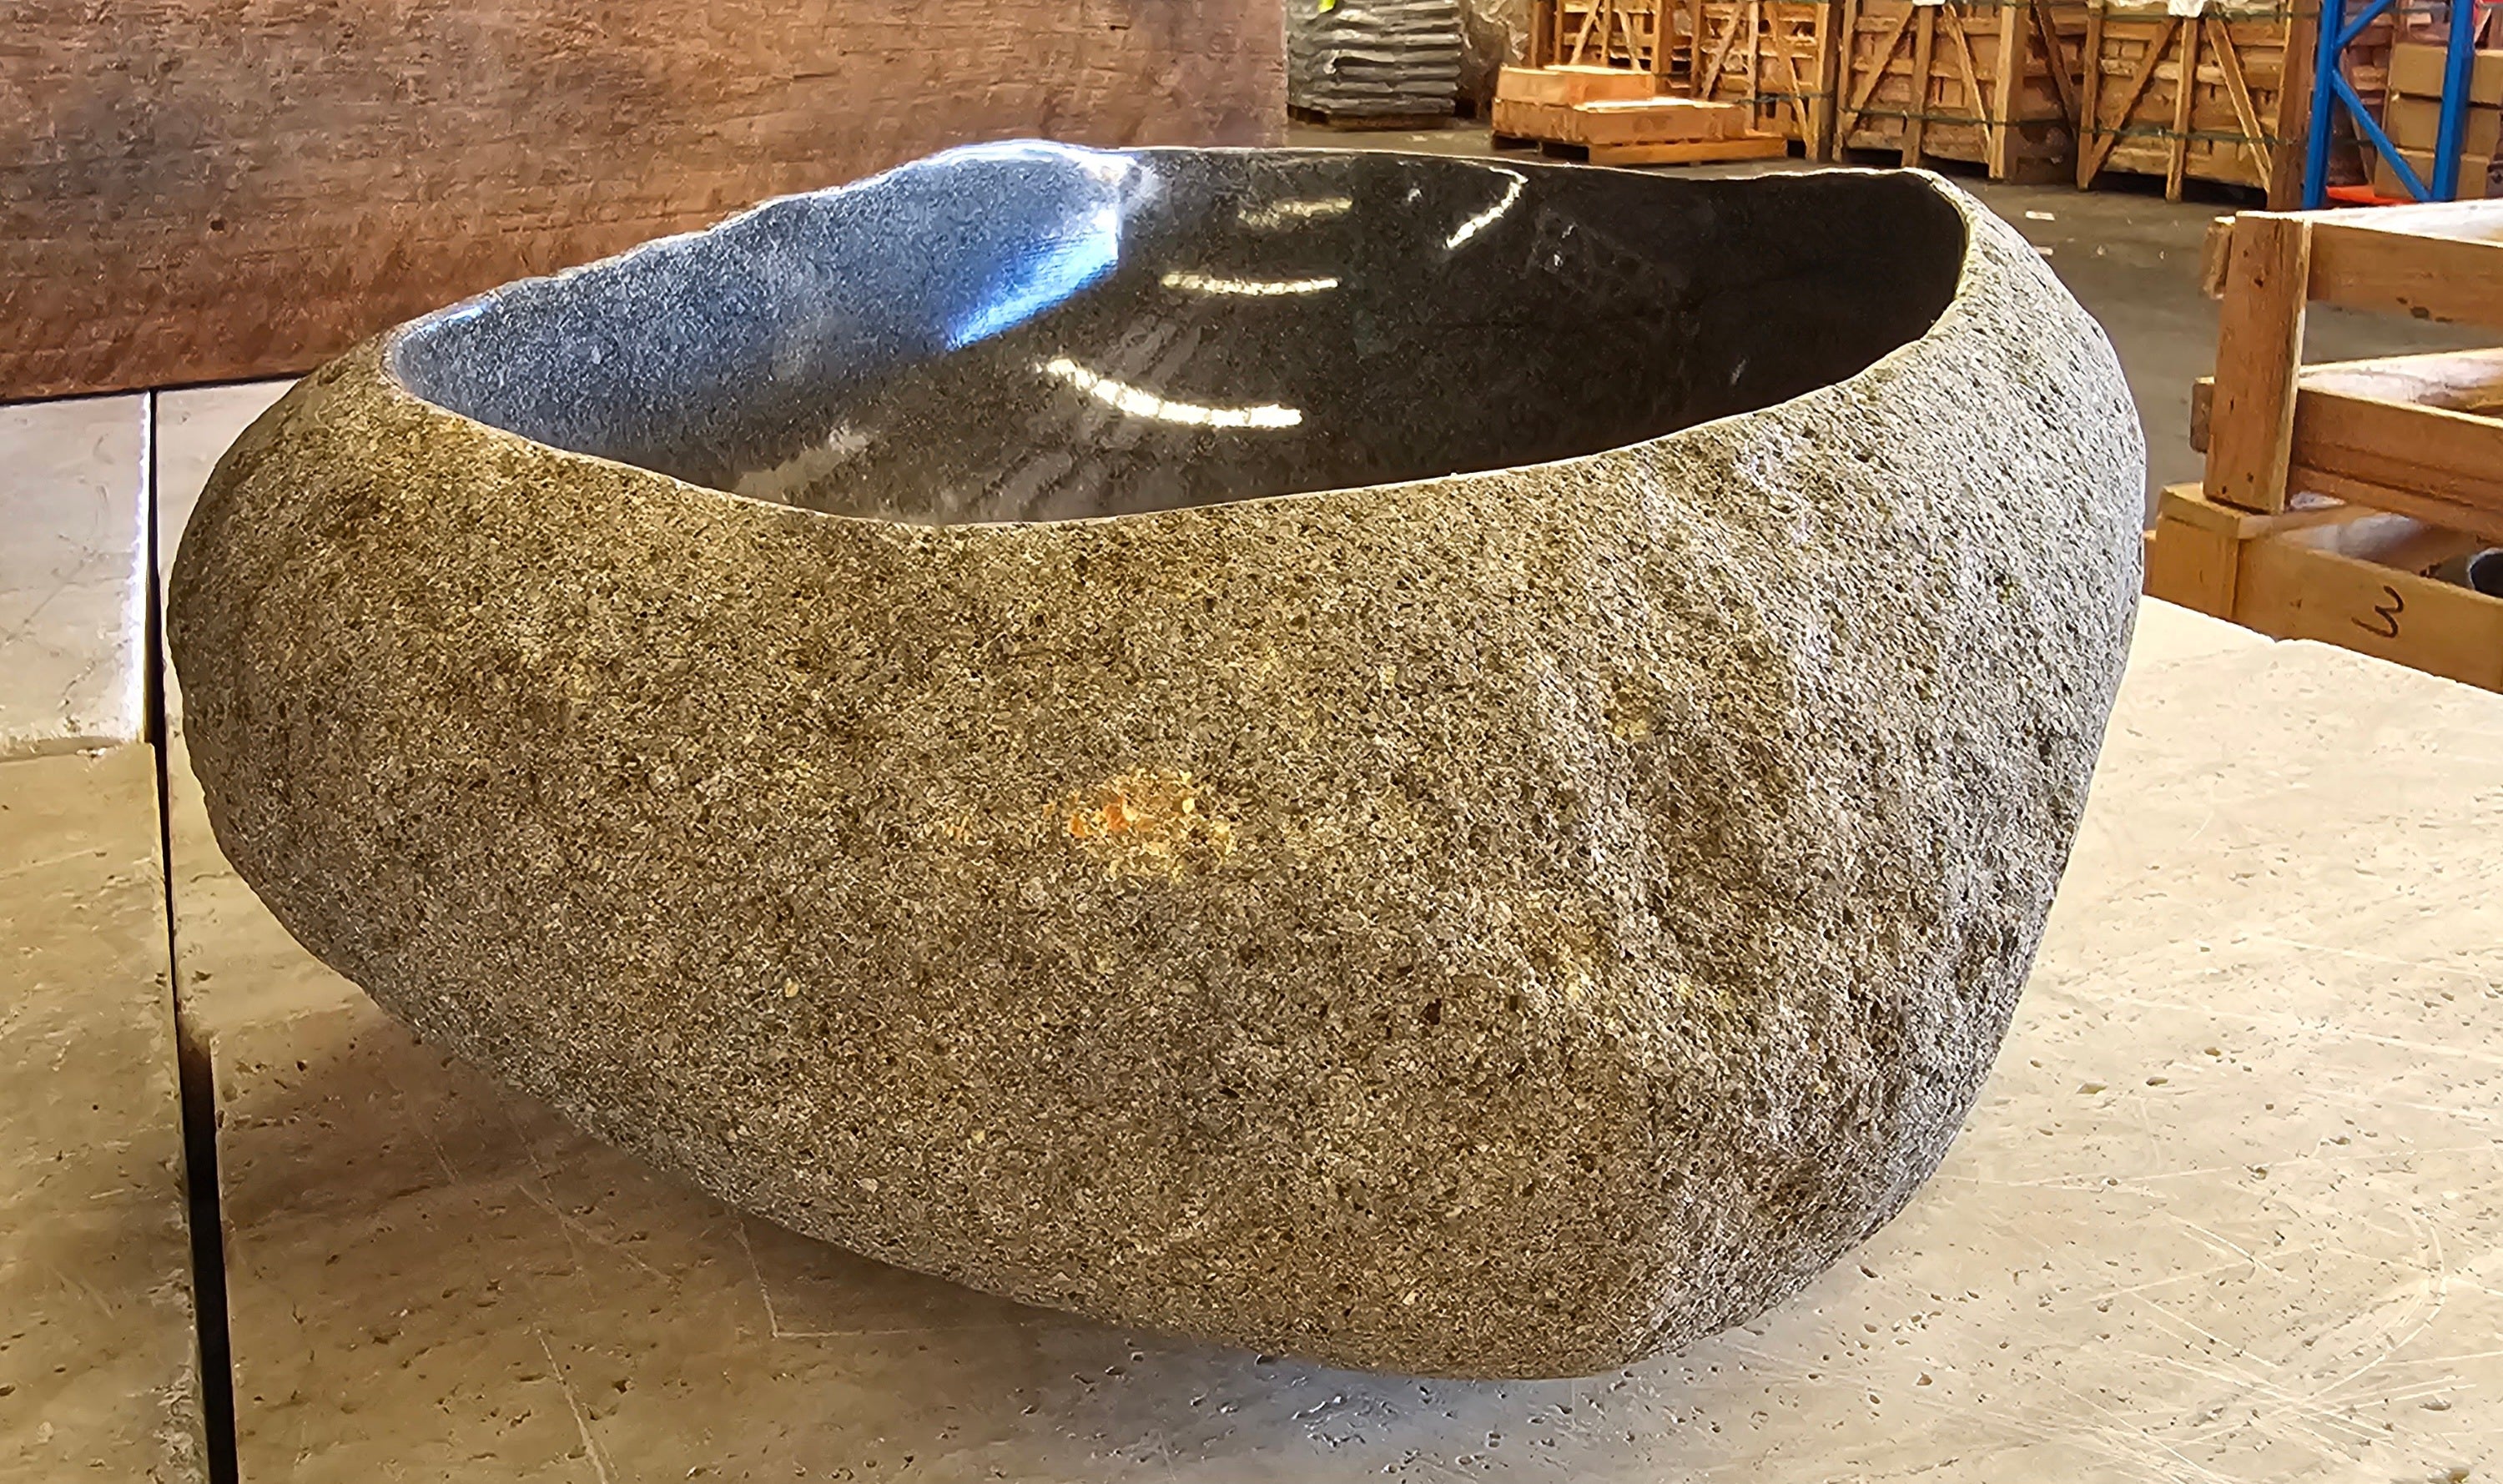 Handmade Natural Oval River Stone Bathroom Basin - RVL 221220